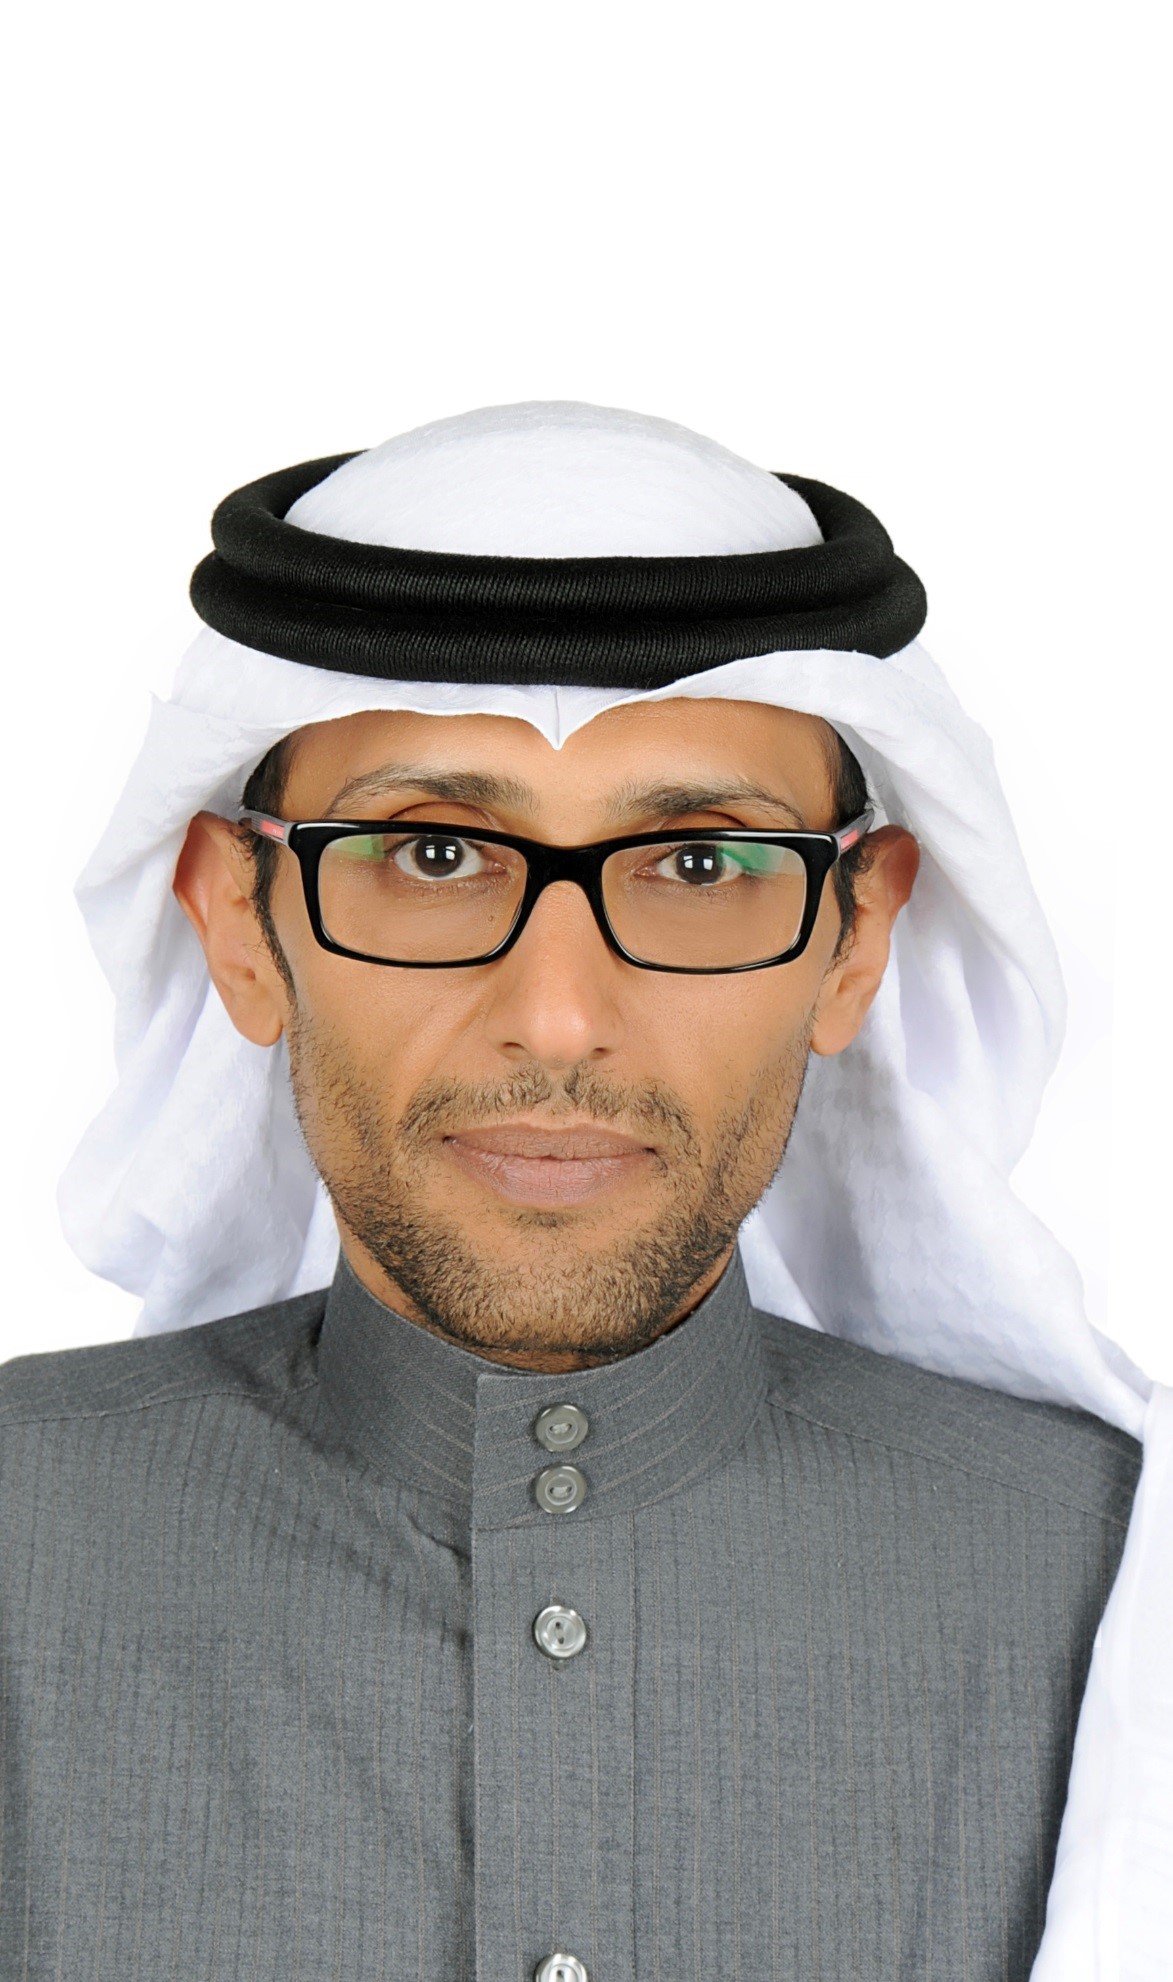 MUFG appoints Tariq Al Ghaziri as Head of Corporate Banking in Riyadh